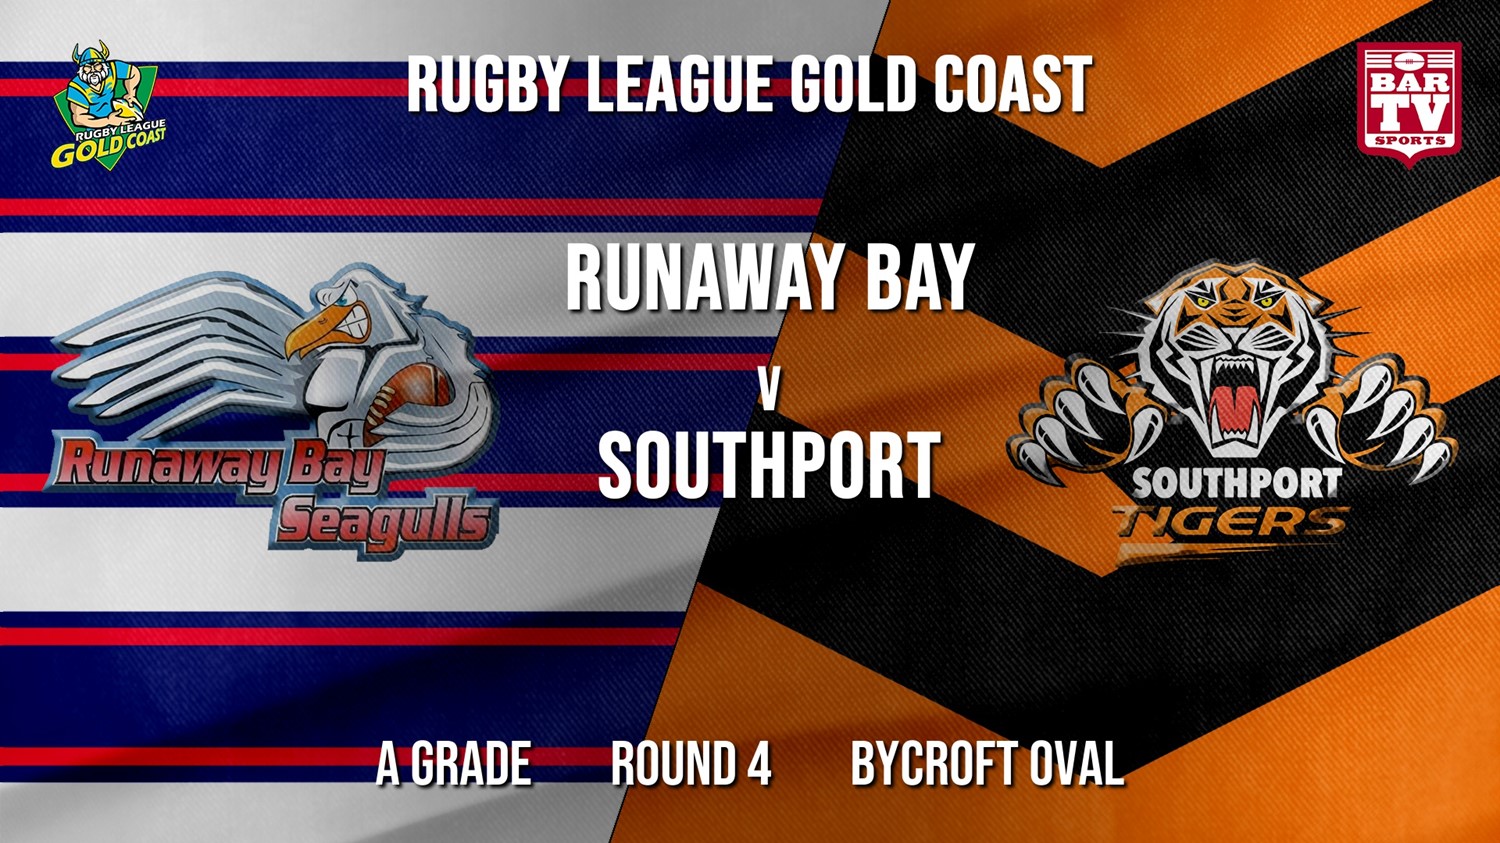 RLGC Round 4 - A Grade - Runaway Bay v Southport Tigers Minigame Slate Image